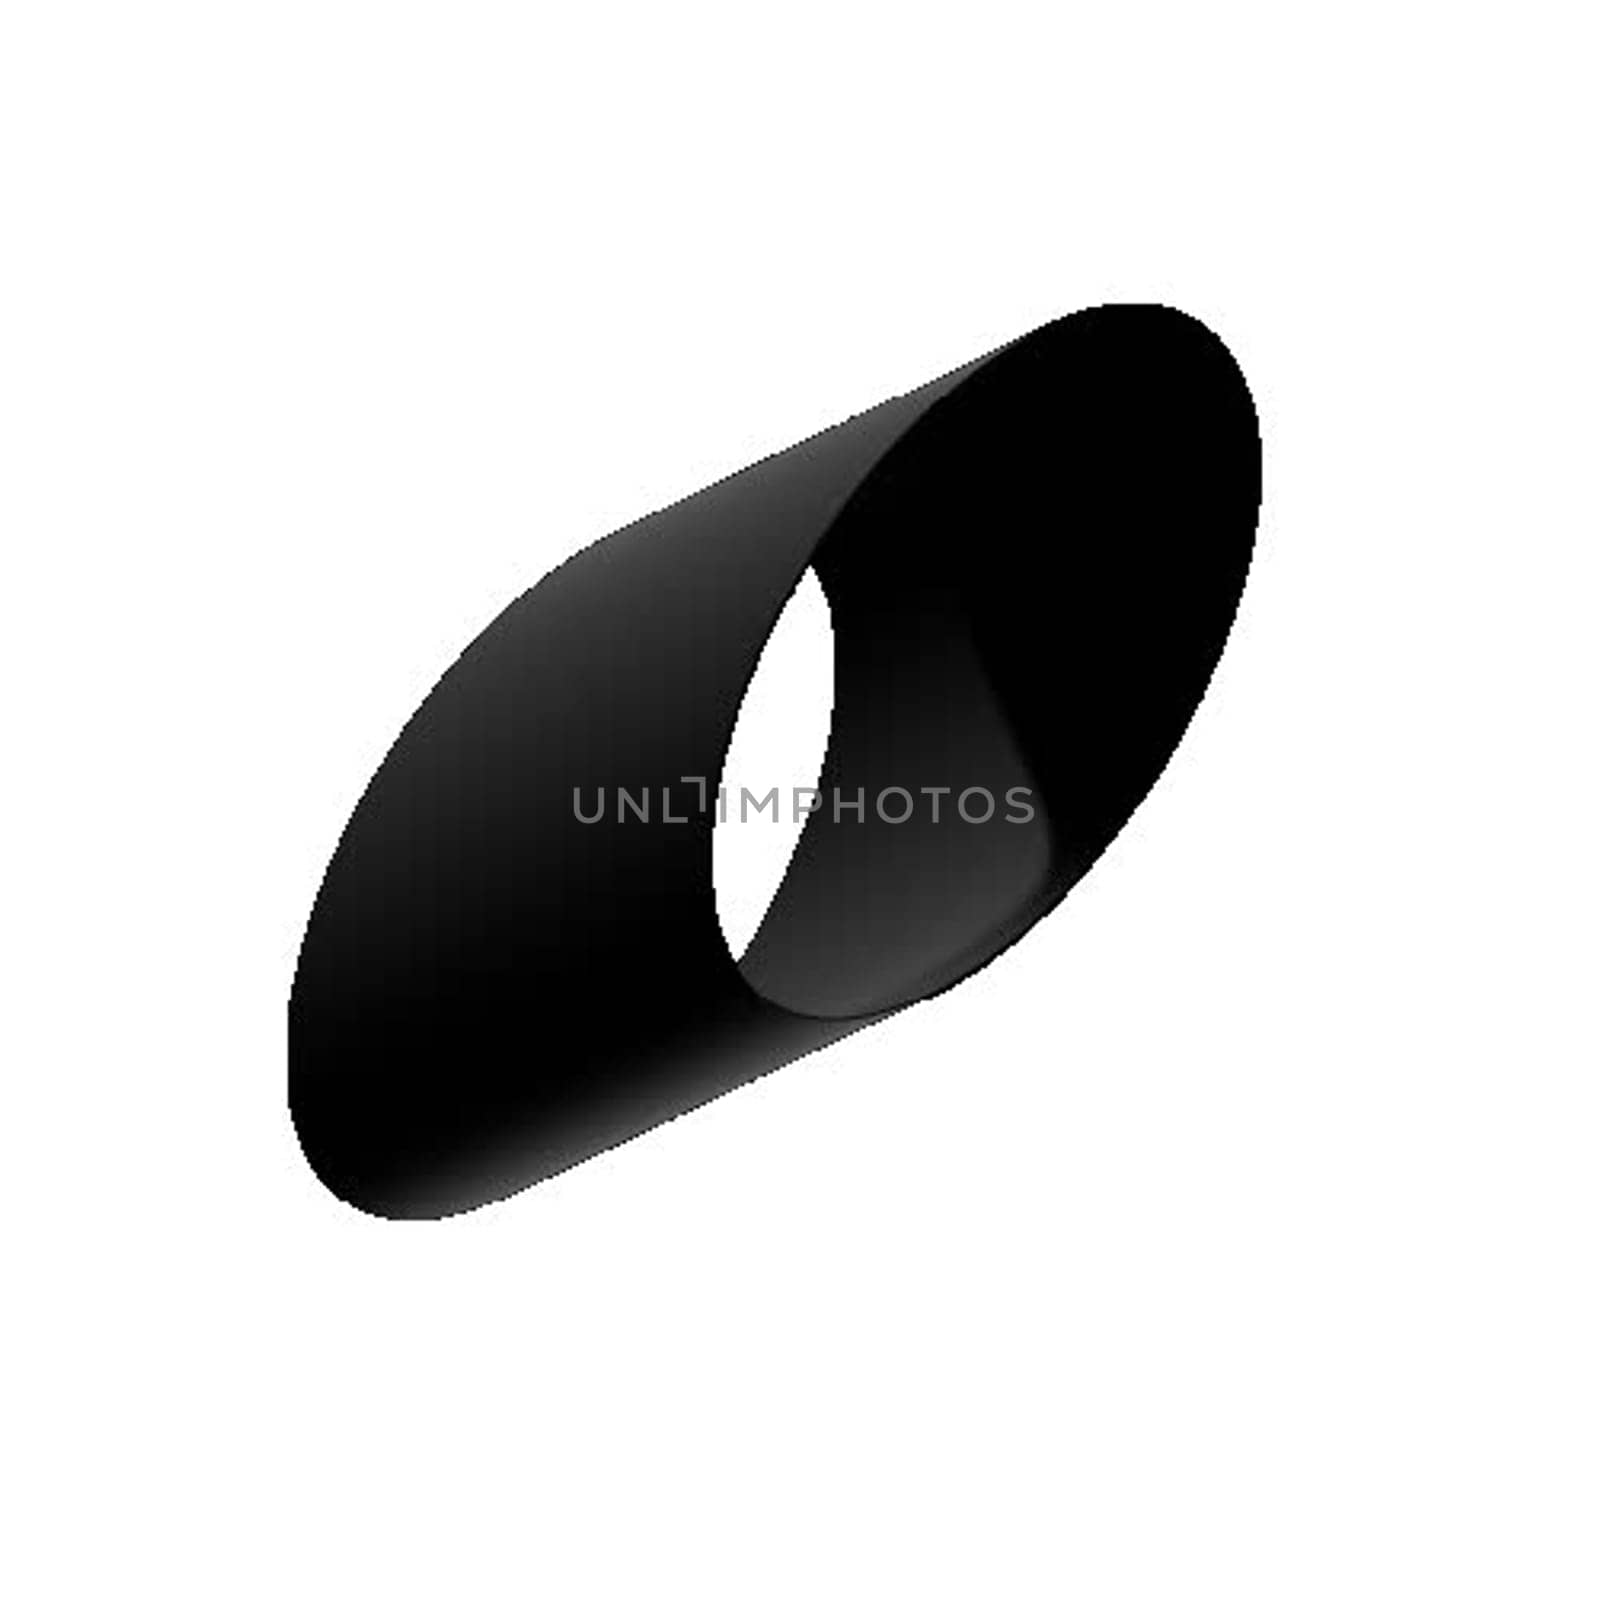 3D black oval geometrical shape illustration